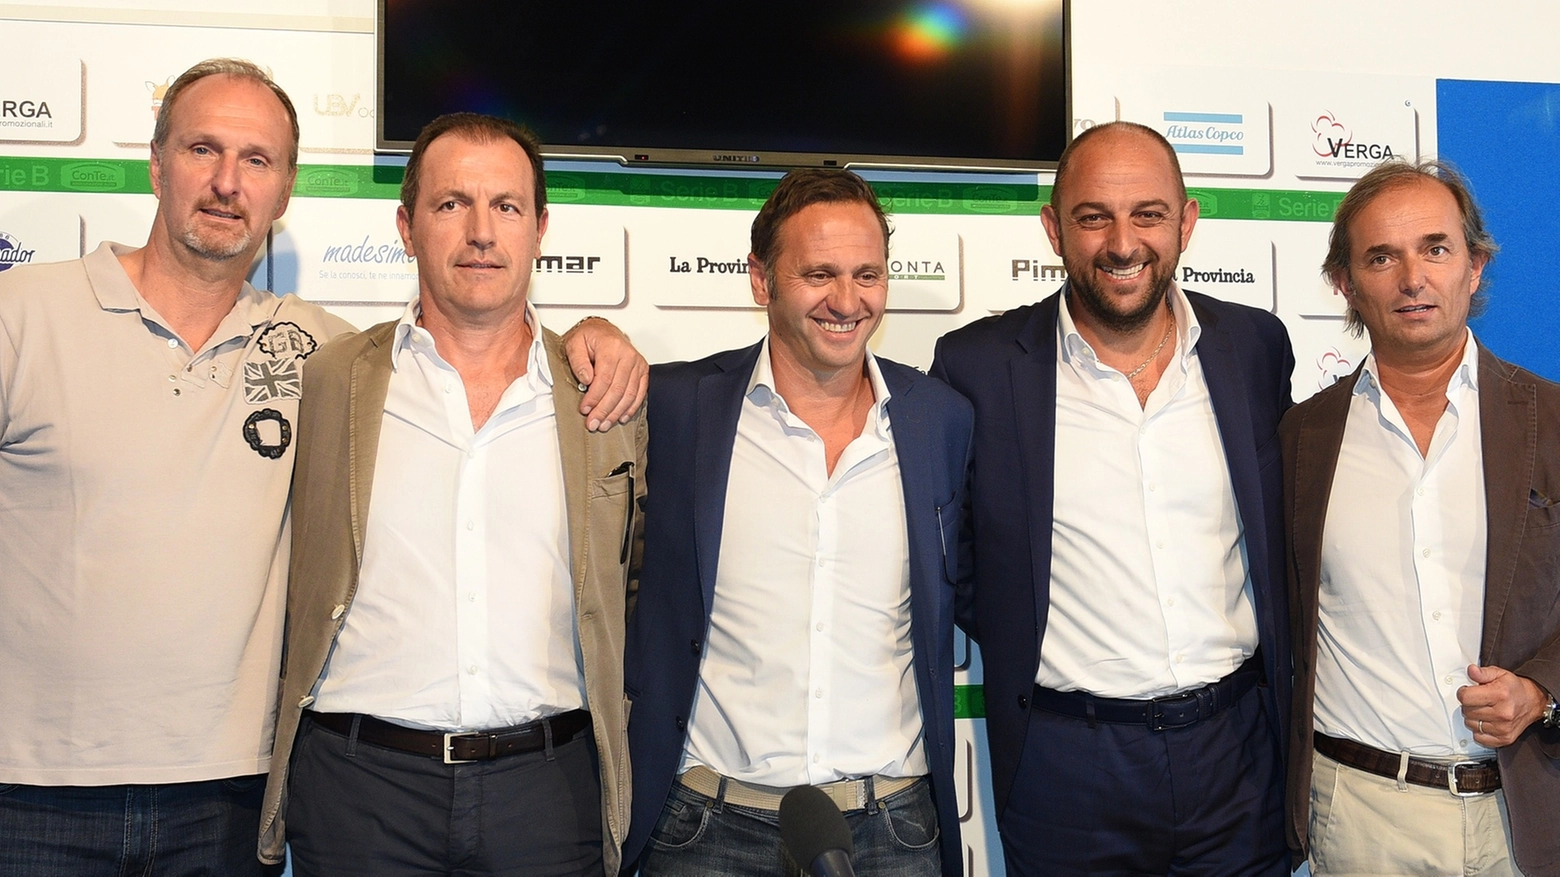 Fabio Bruni, Gianluca Andrissi, Fabio Gallo, Diego Foresti, Pietro Porro